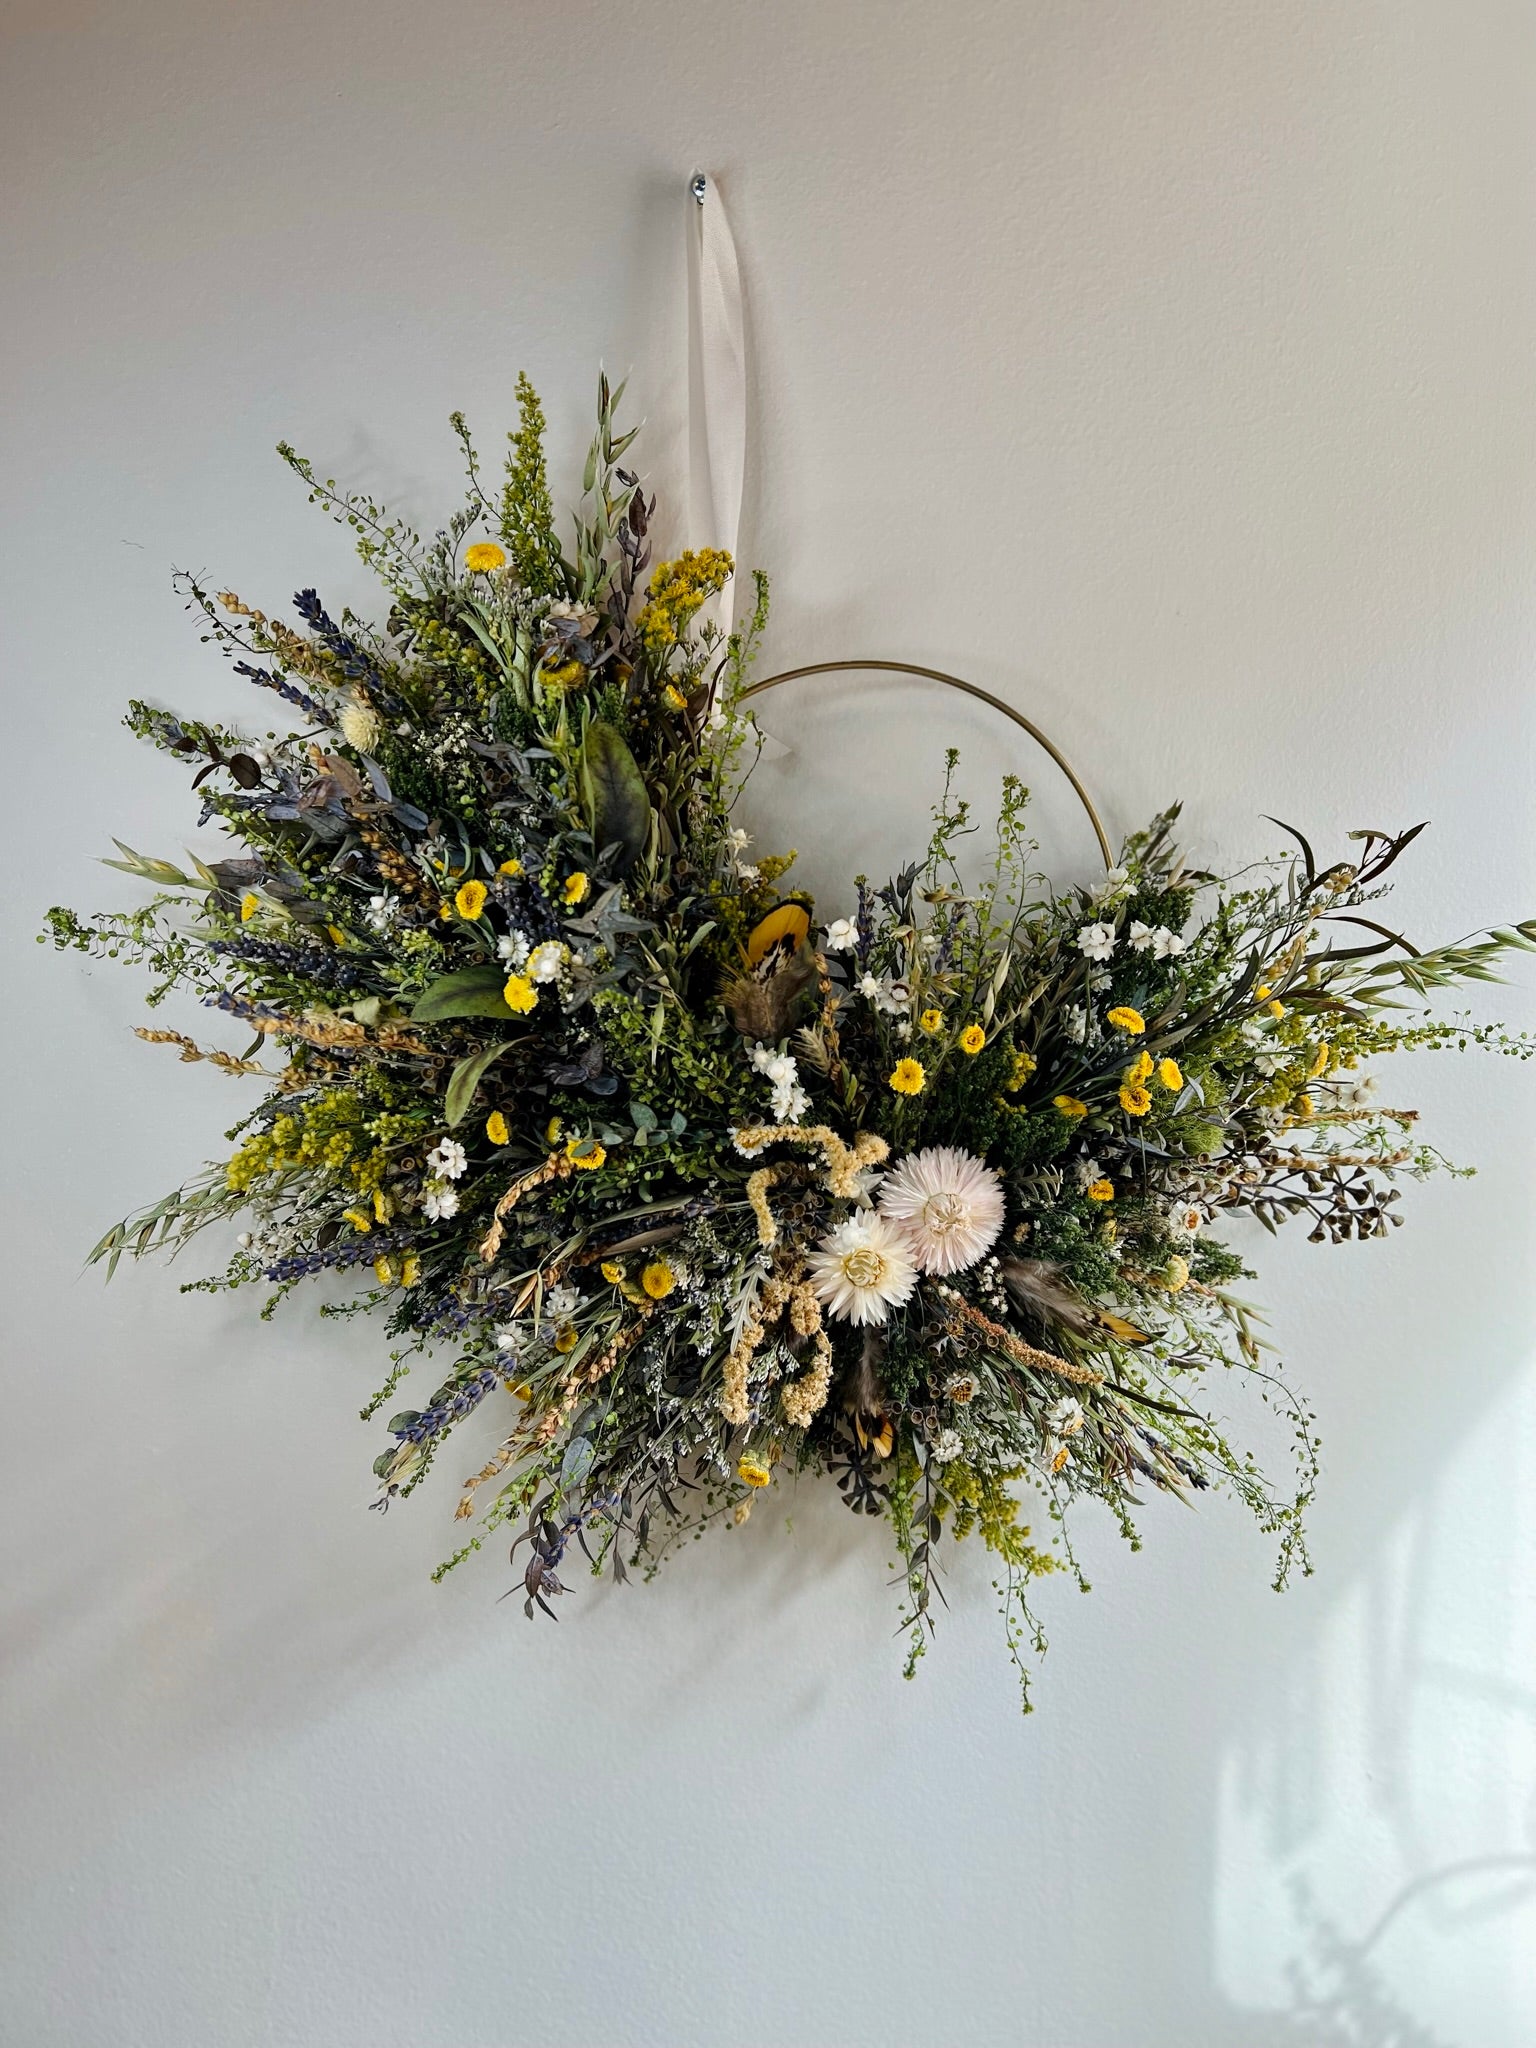 Medium 10" wreath. 16" with flowers